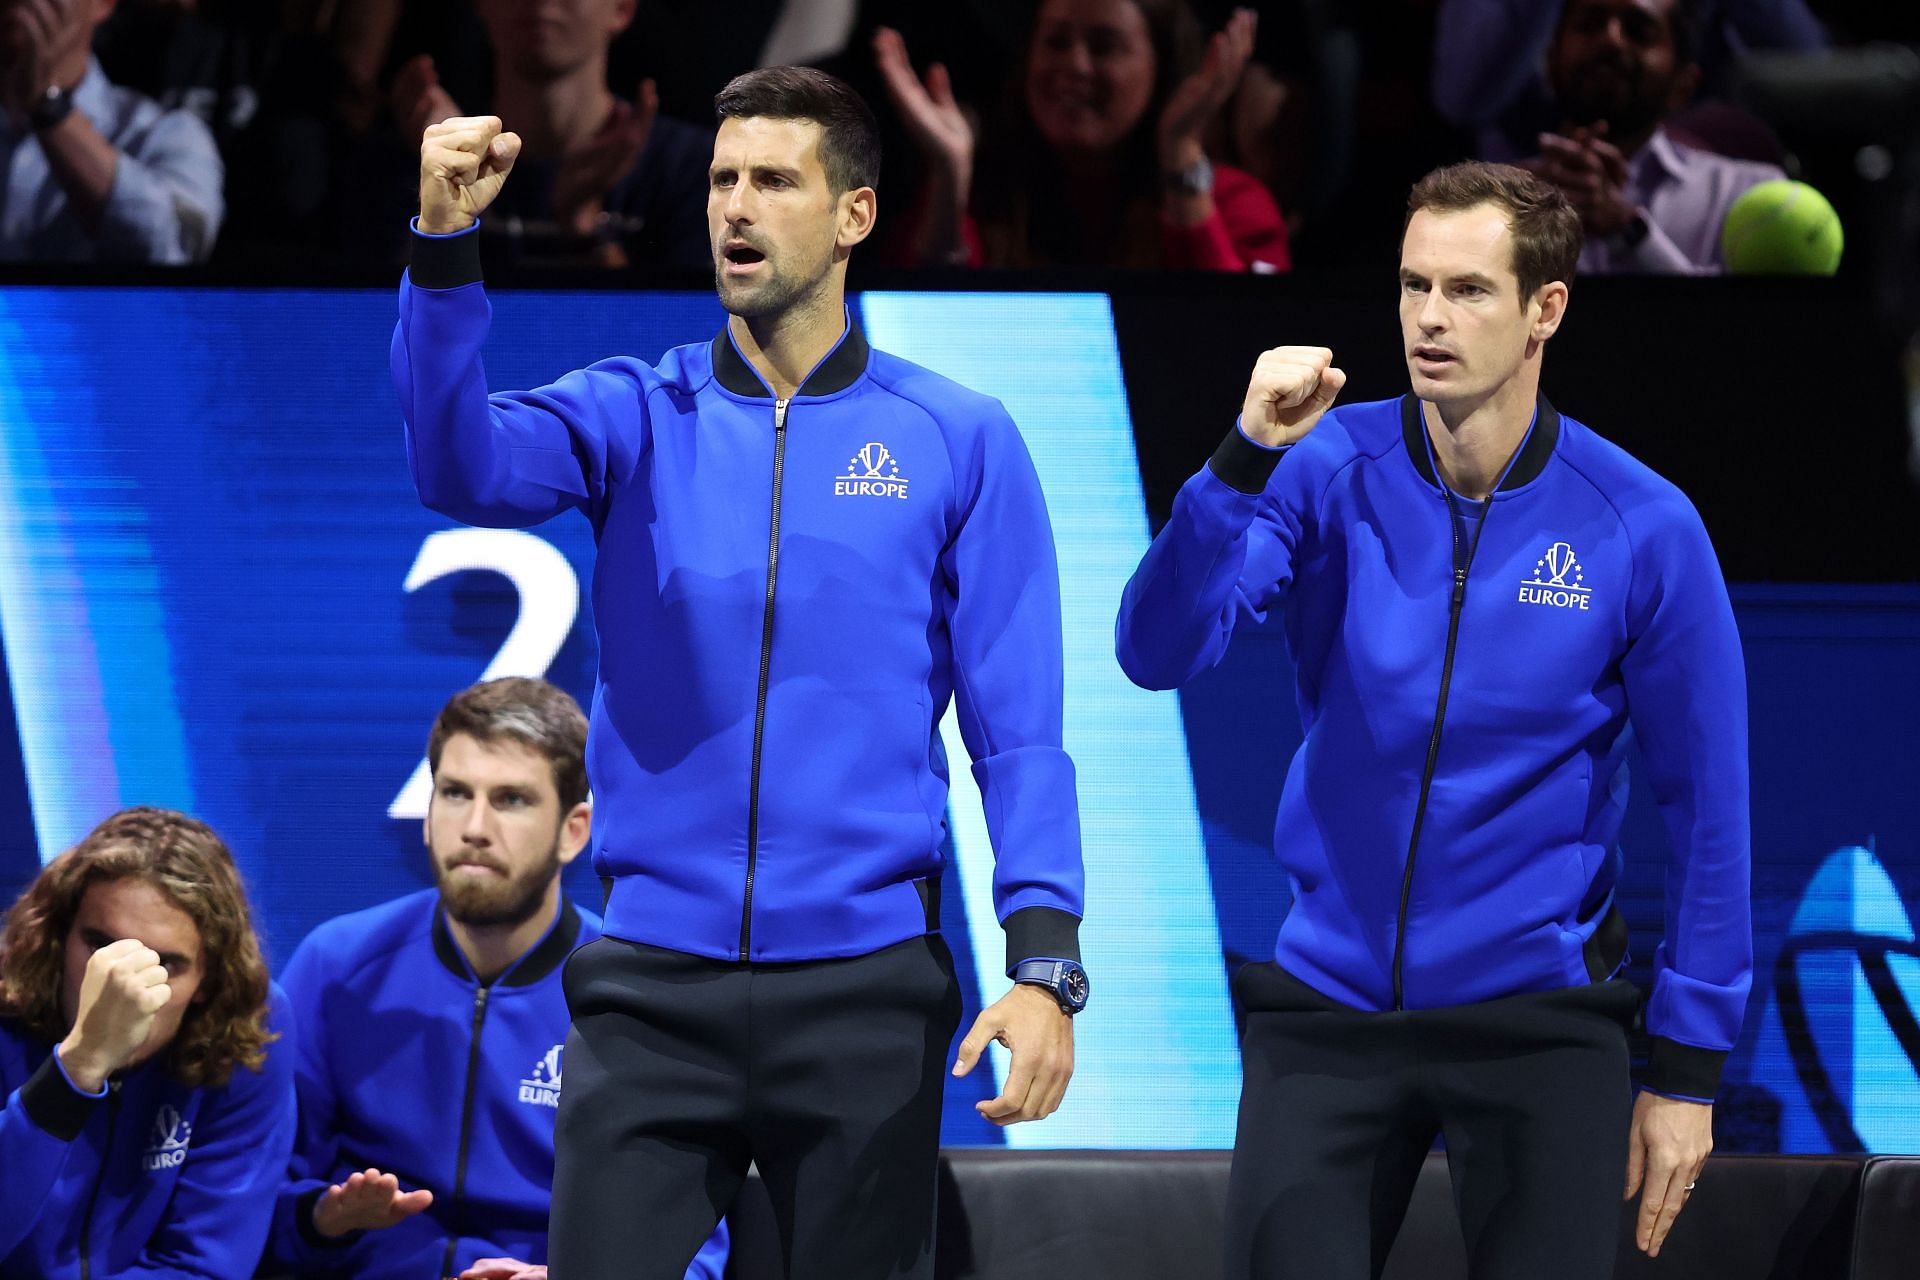 Djokovic downs Hurkacz to reach Dubai semis - CGTN